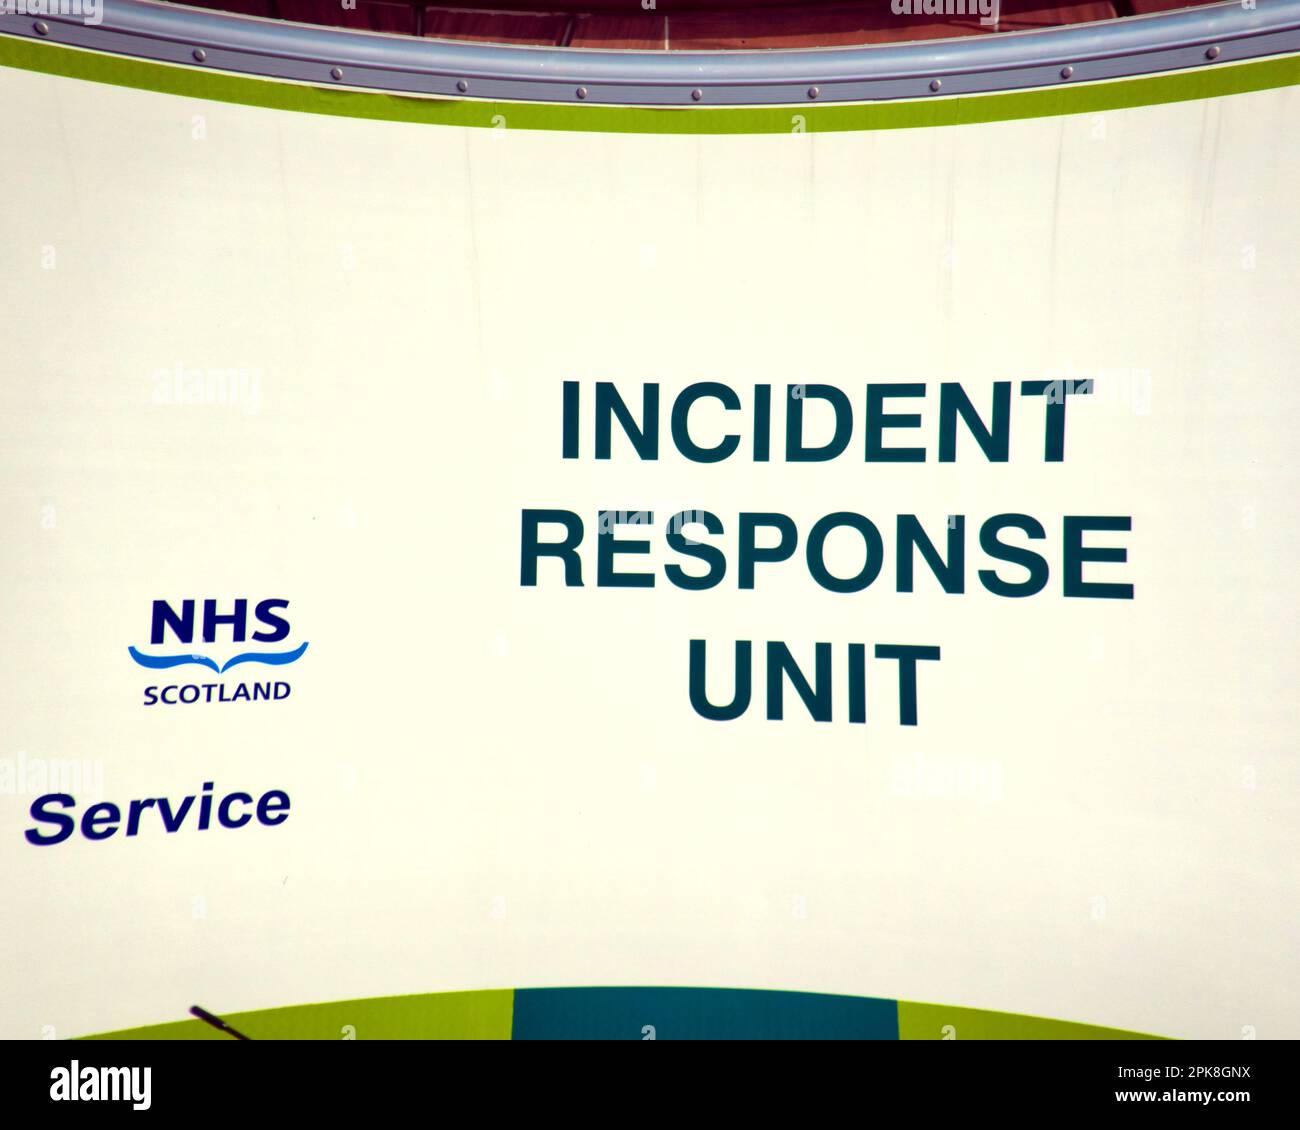 NHS incident response unit van side Stock Photo